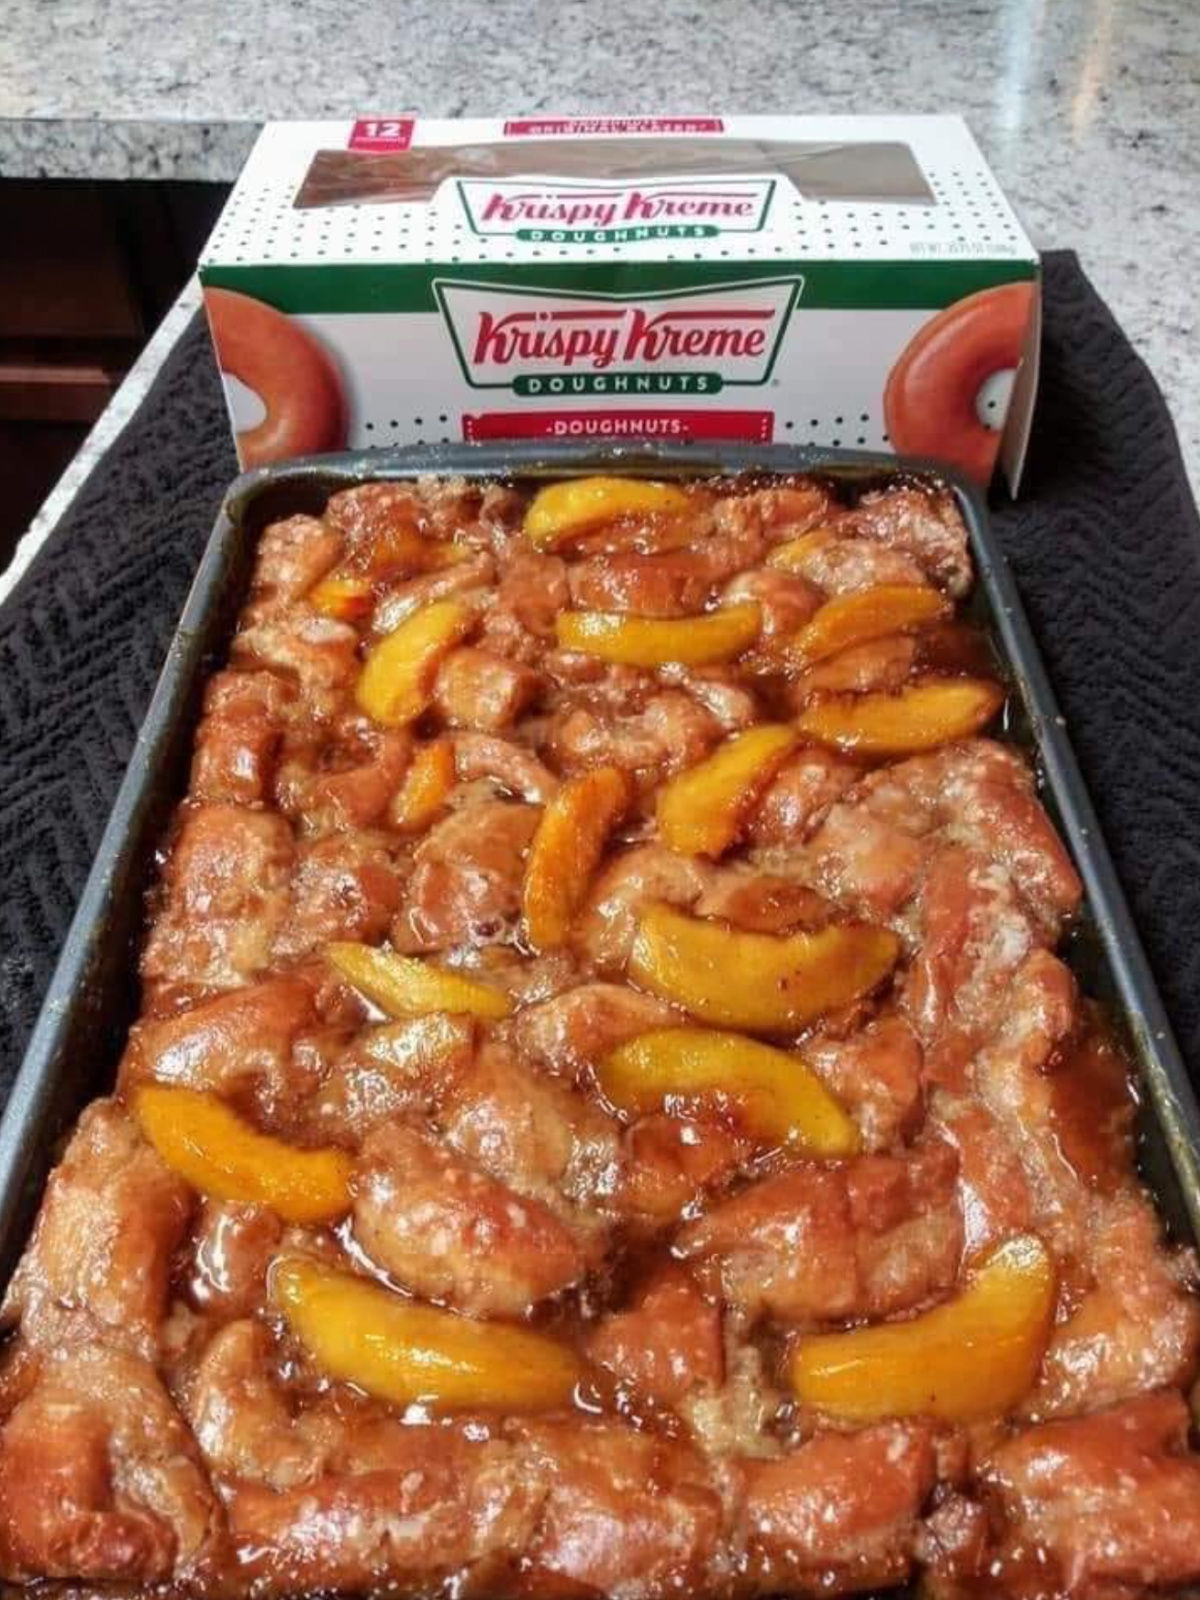 krispy Kreme peach cobbler in baking dish